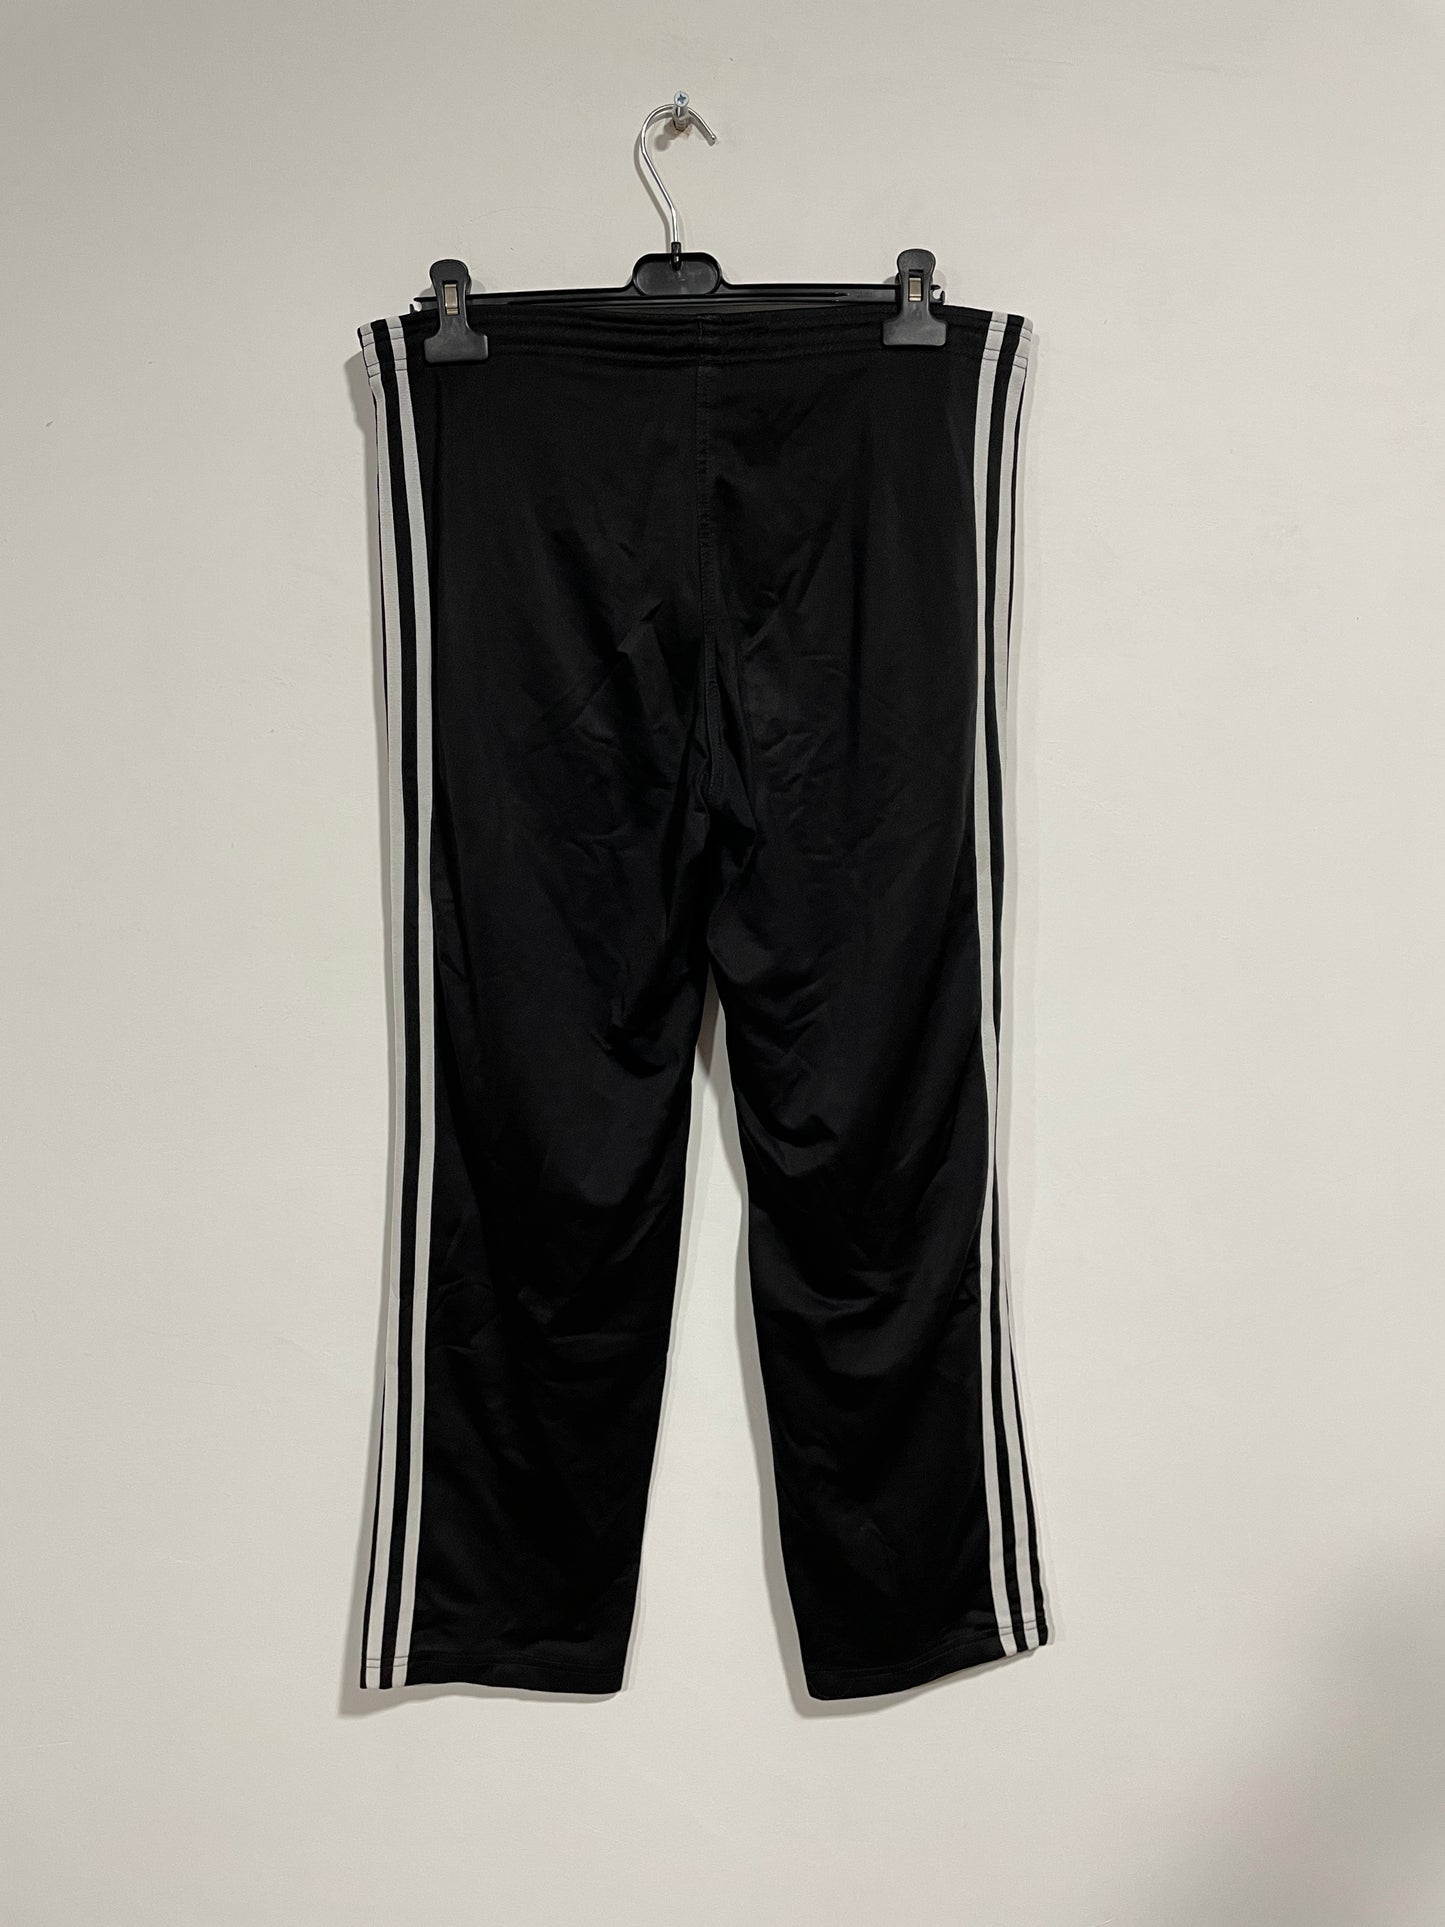 Pantalone tuta Adidas Originals (B037)